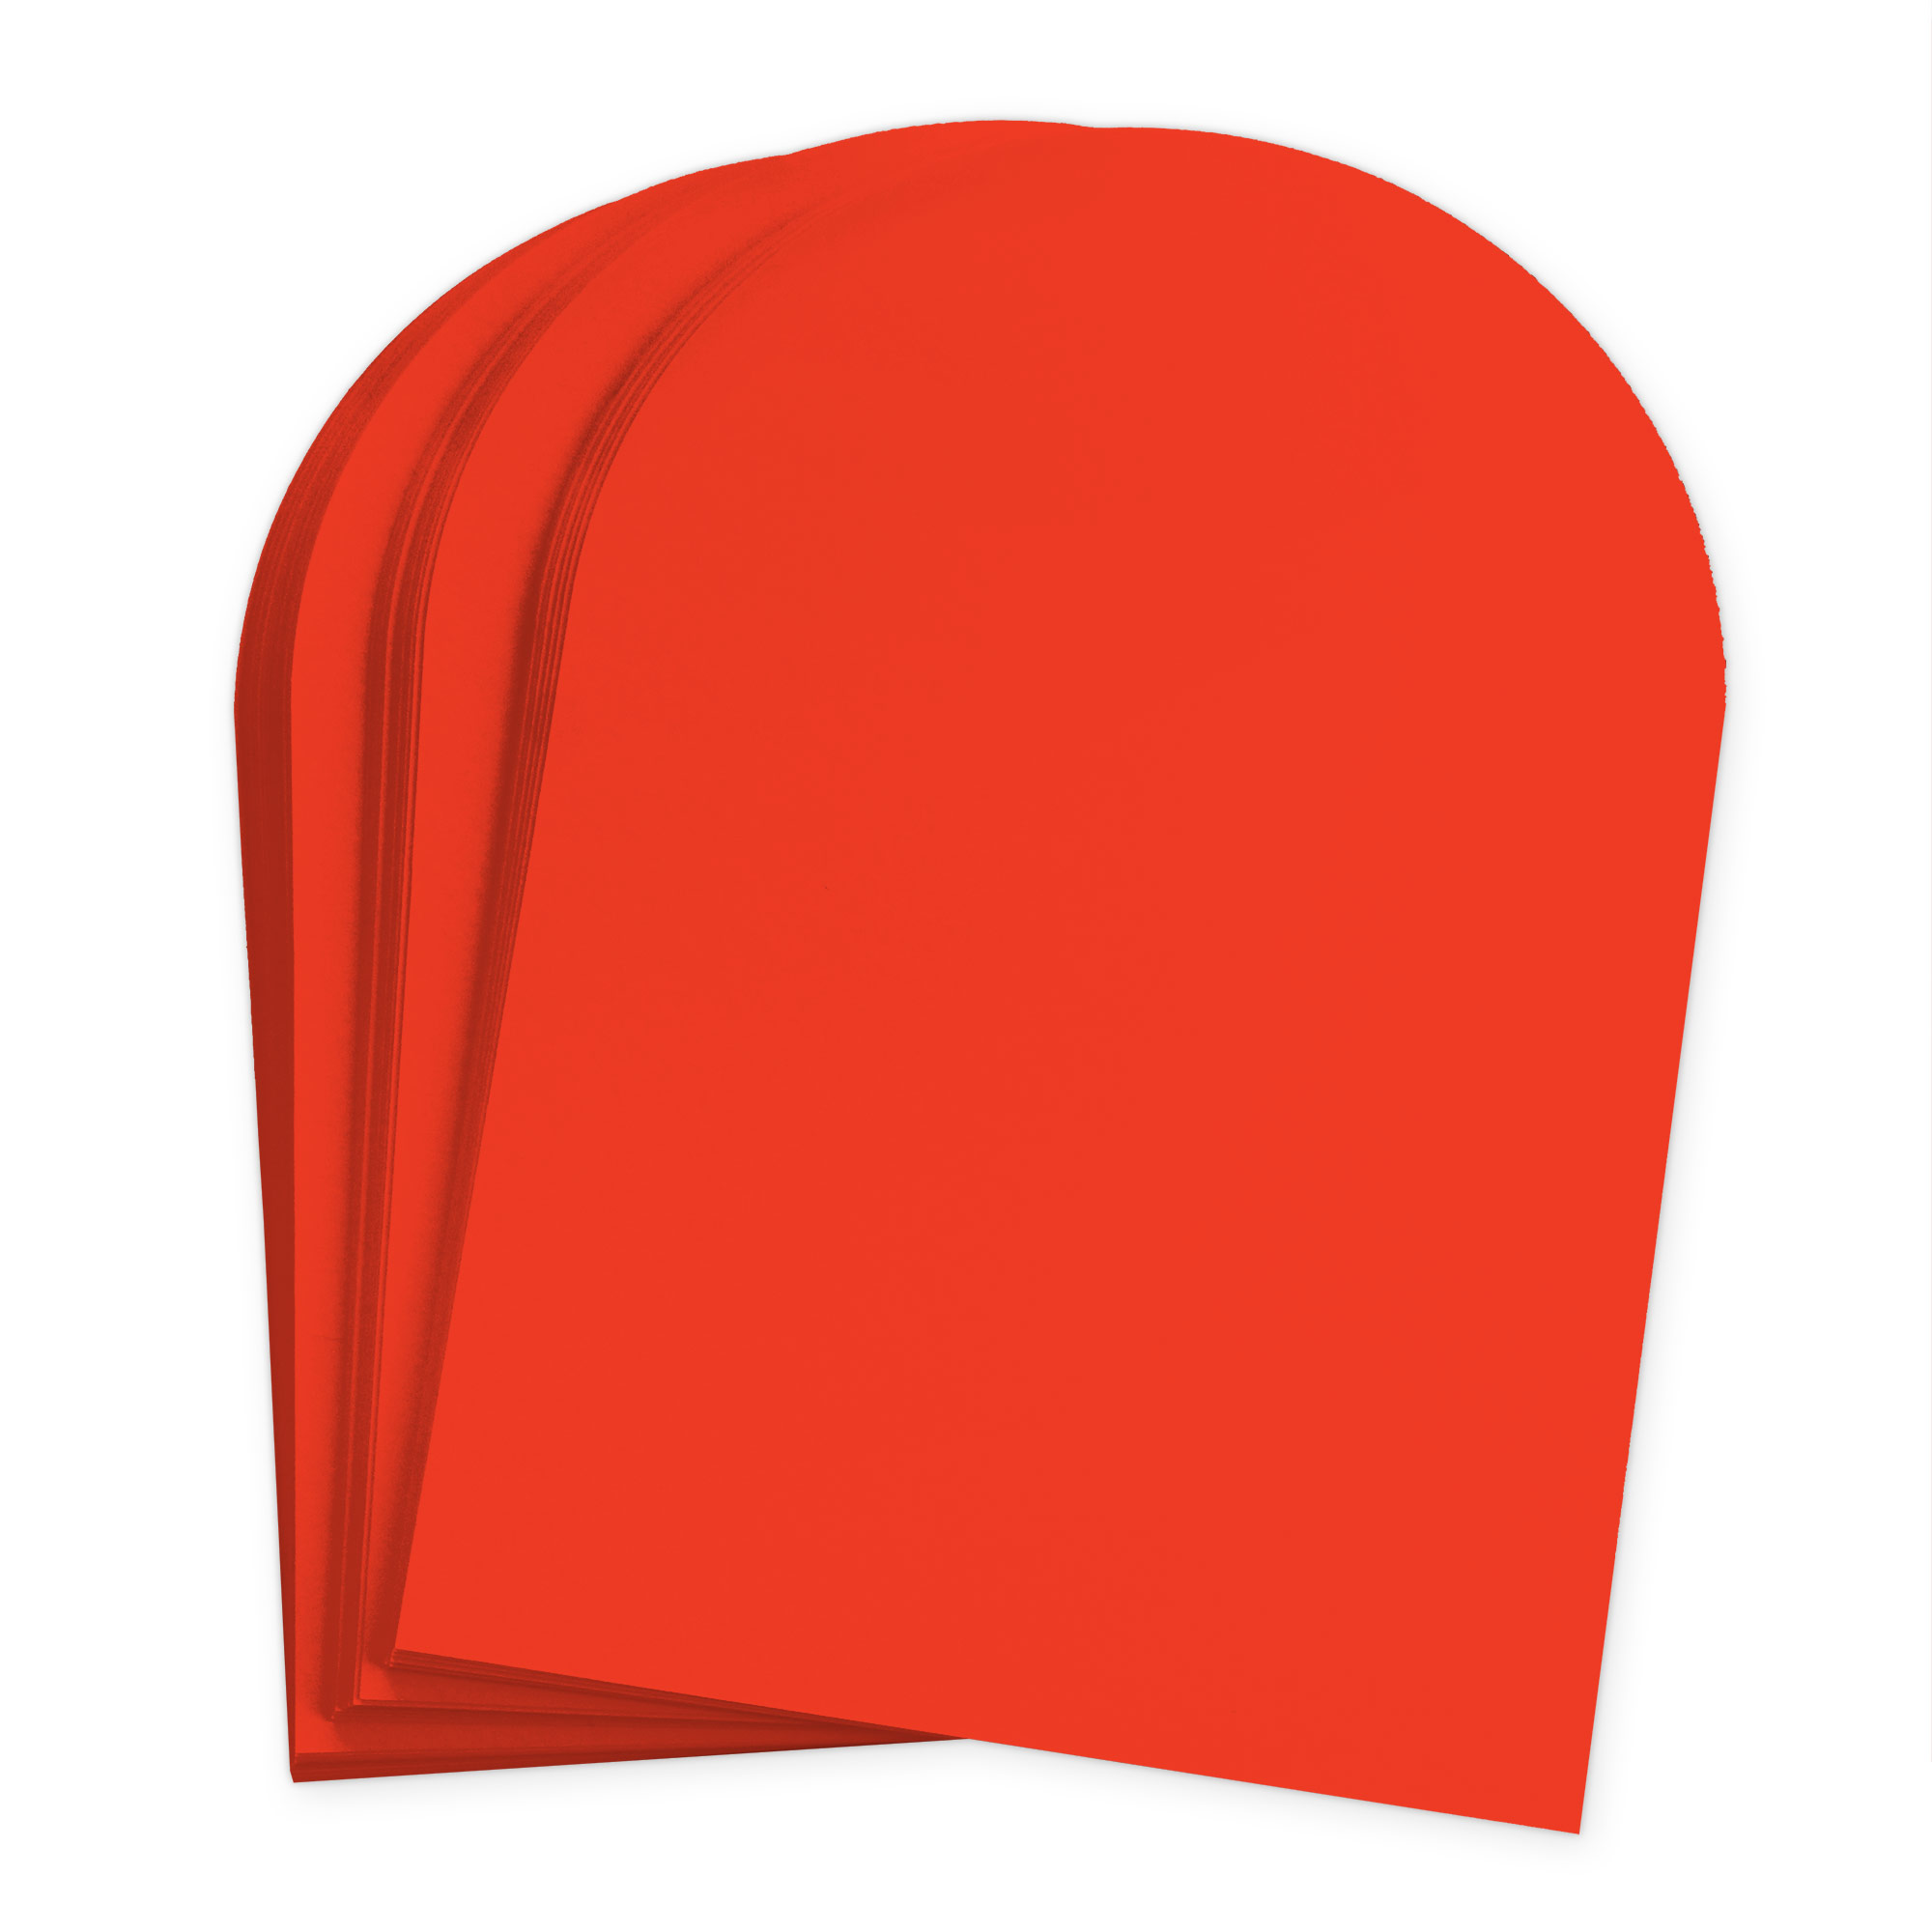 Cayenne Red Arch Shaped Card - A2 Gmund Colors Matt 4 1/4 x 5 1/2 111C